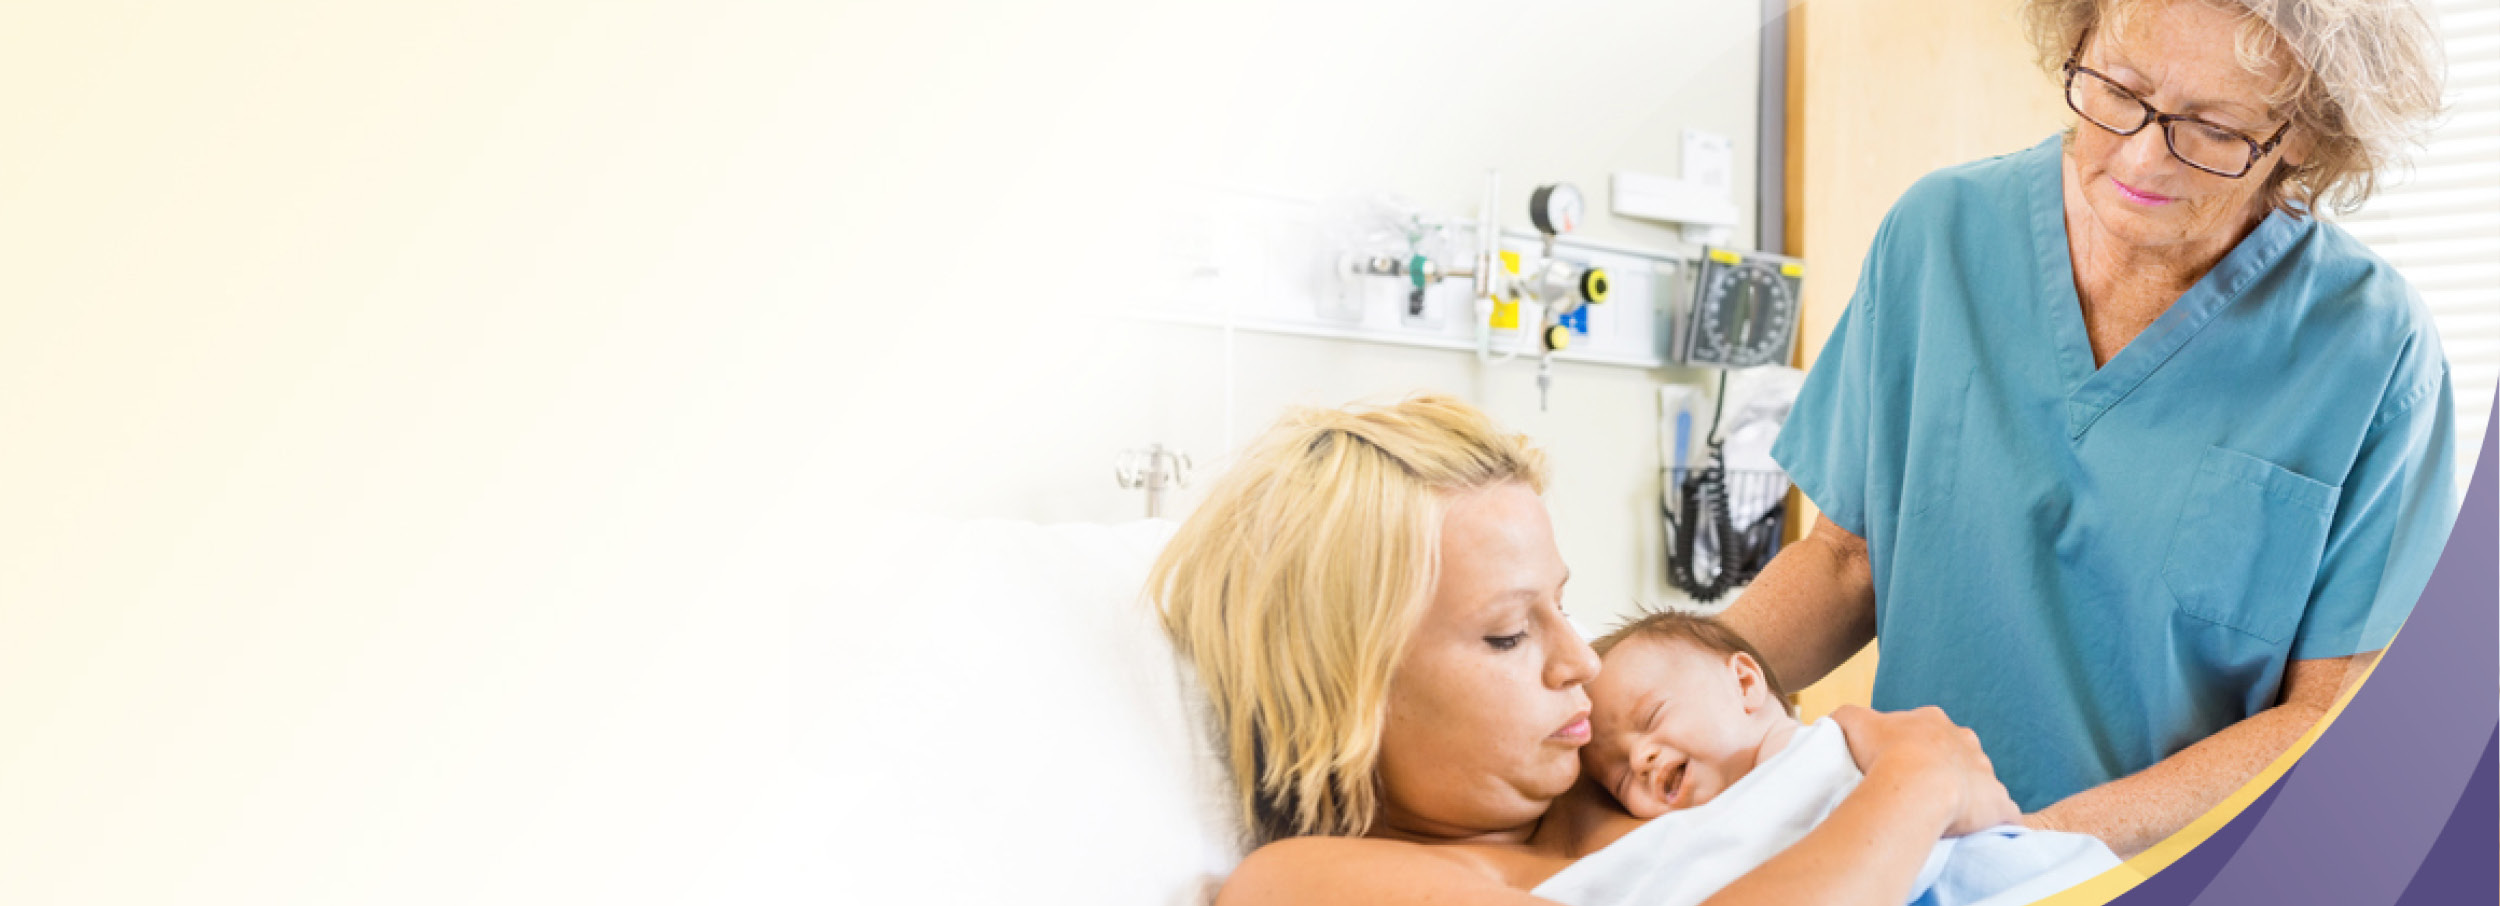 Slider image 5_Nurse assisting mother and baby skin to skin